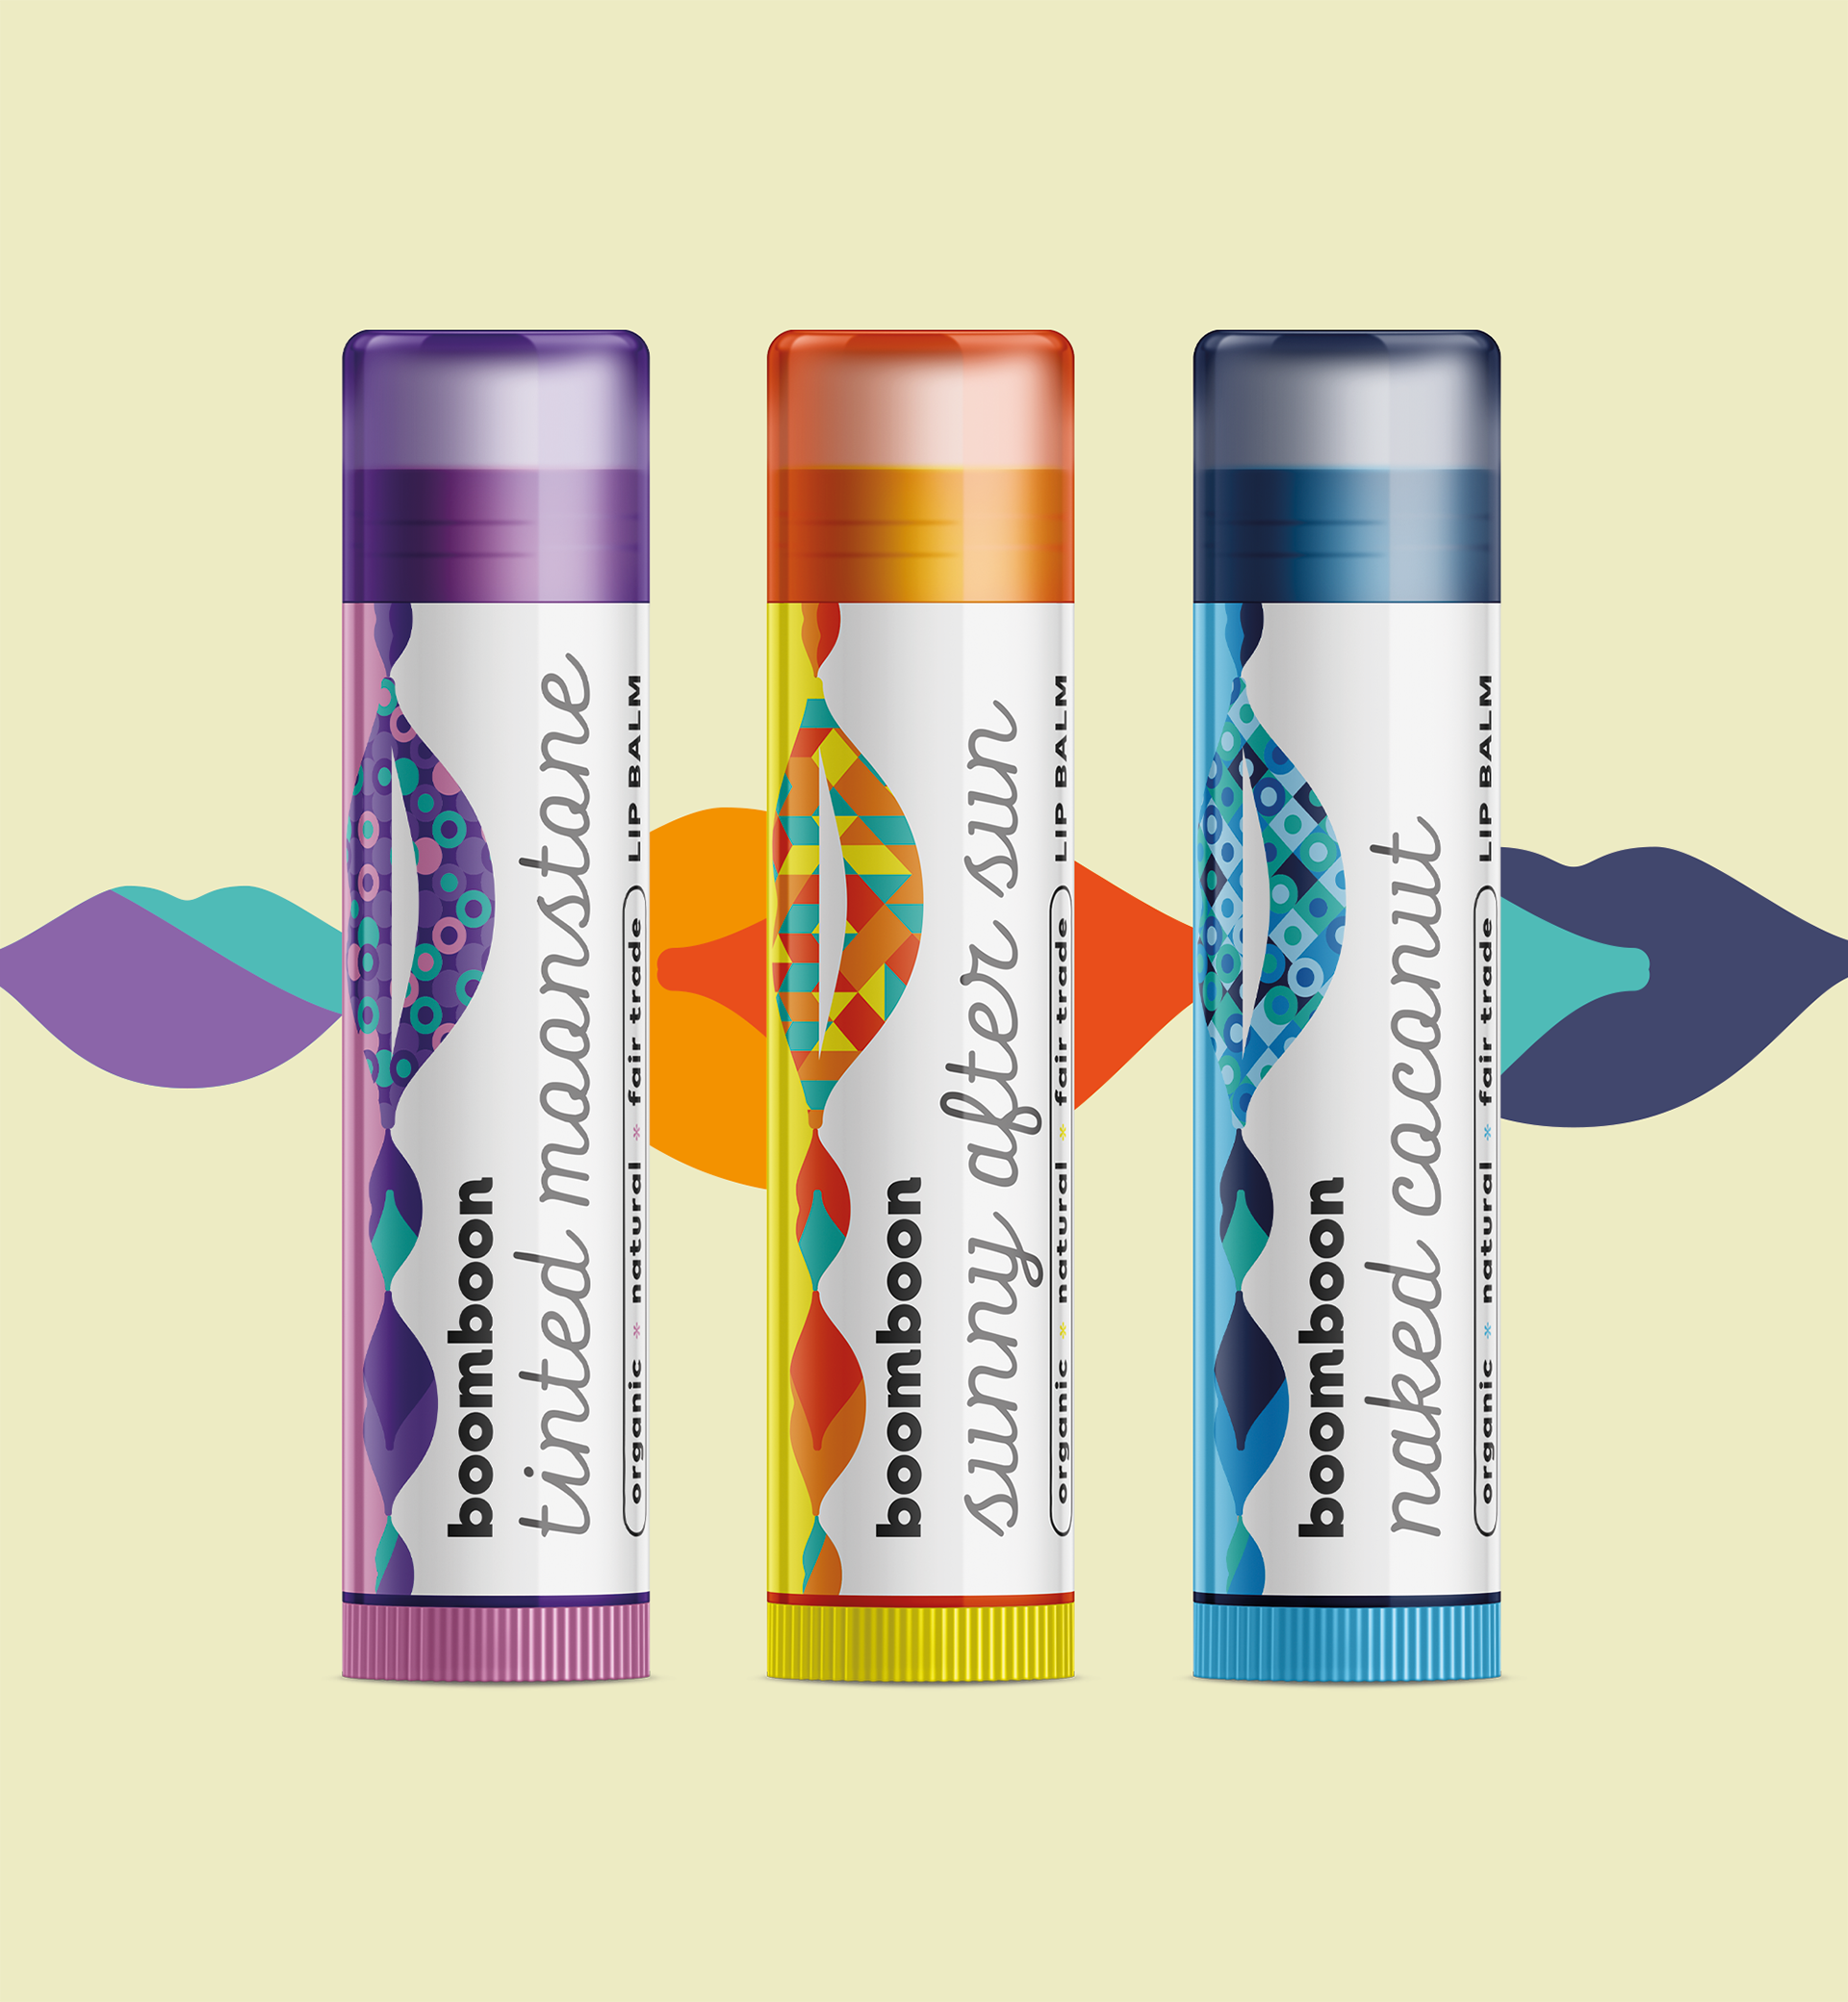 HOREA GRINDEAN - Your brand's friend - branding & packaging designer - lip balm packaging design ...